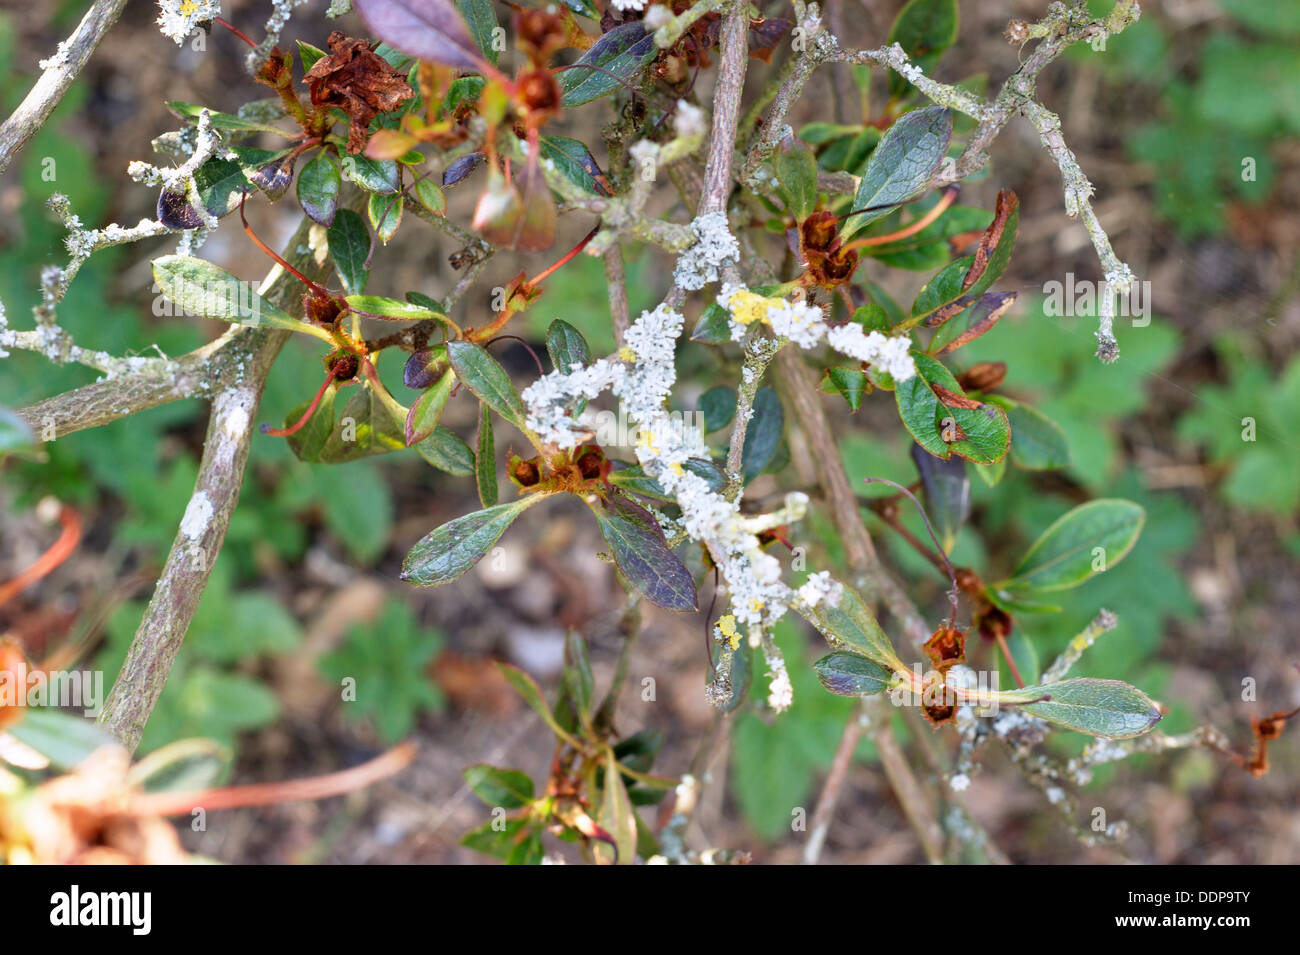 Azalea shrub with stems & leaves covered in fungus & disease Stock Photo